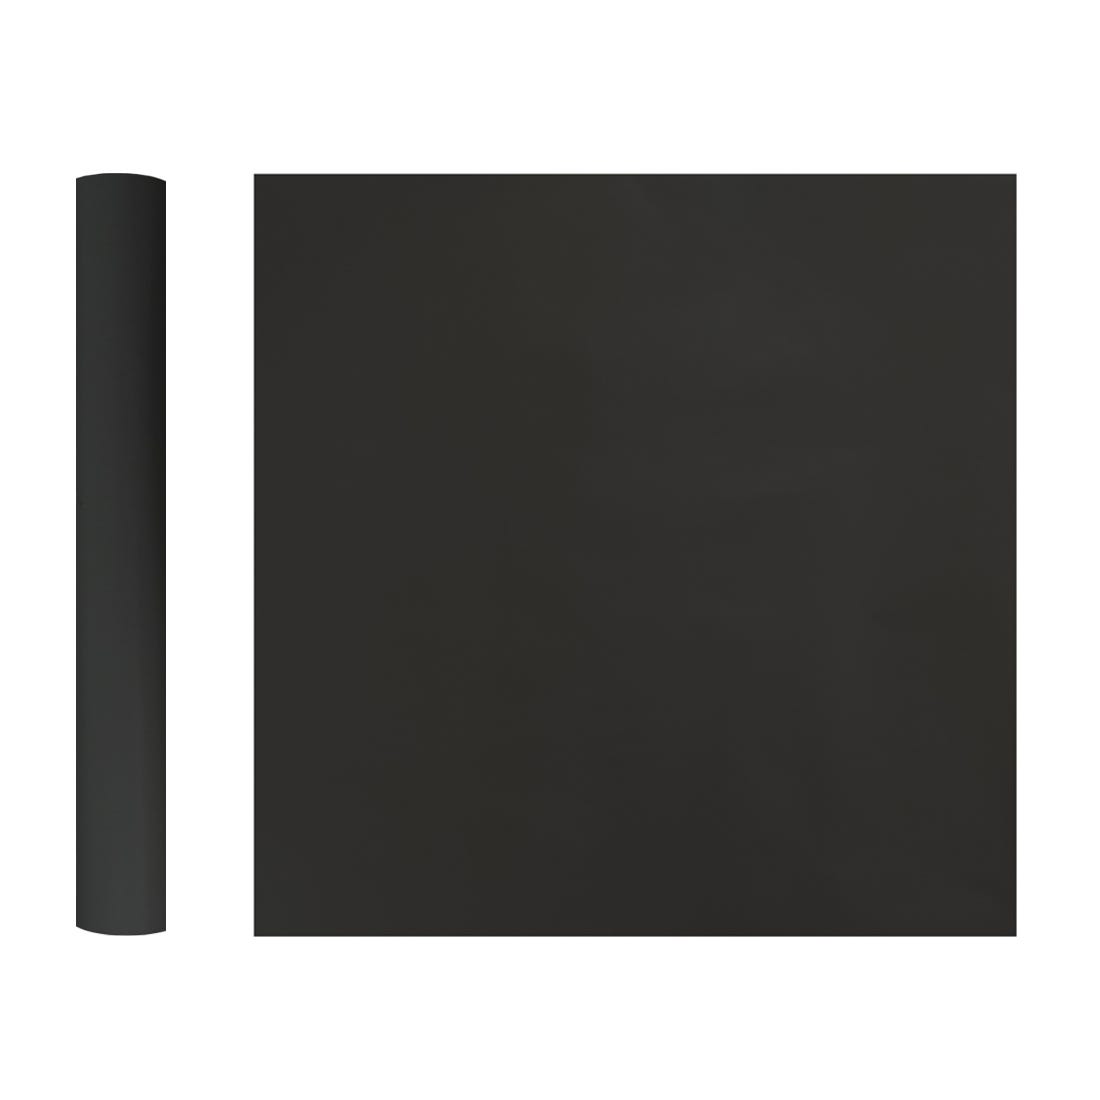 Acomoda Textil – Lámina Vinilo Autoadhesivo para Muebles 0,45x2 Metros.  Vinilo Decorativo Impermeable para Forrar Puerta o Mesa. (Negro, 2 UD)